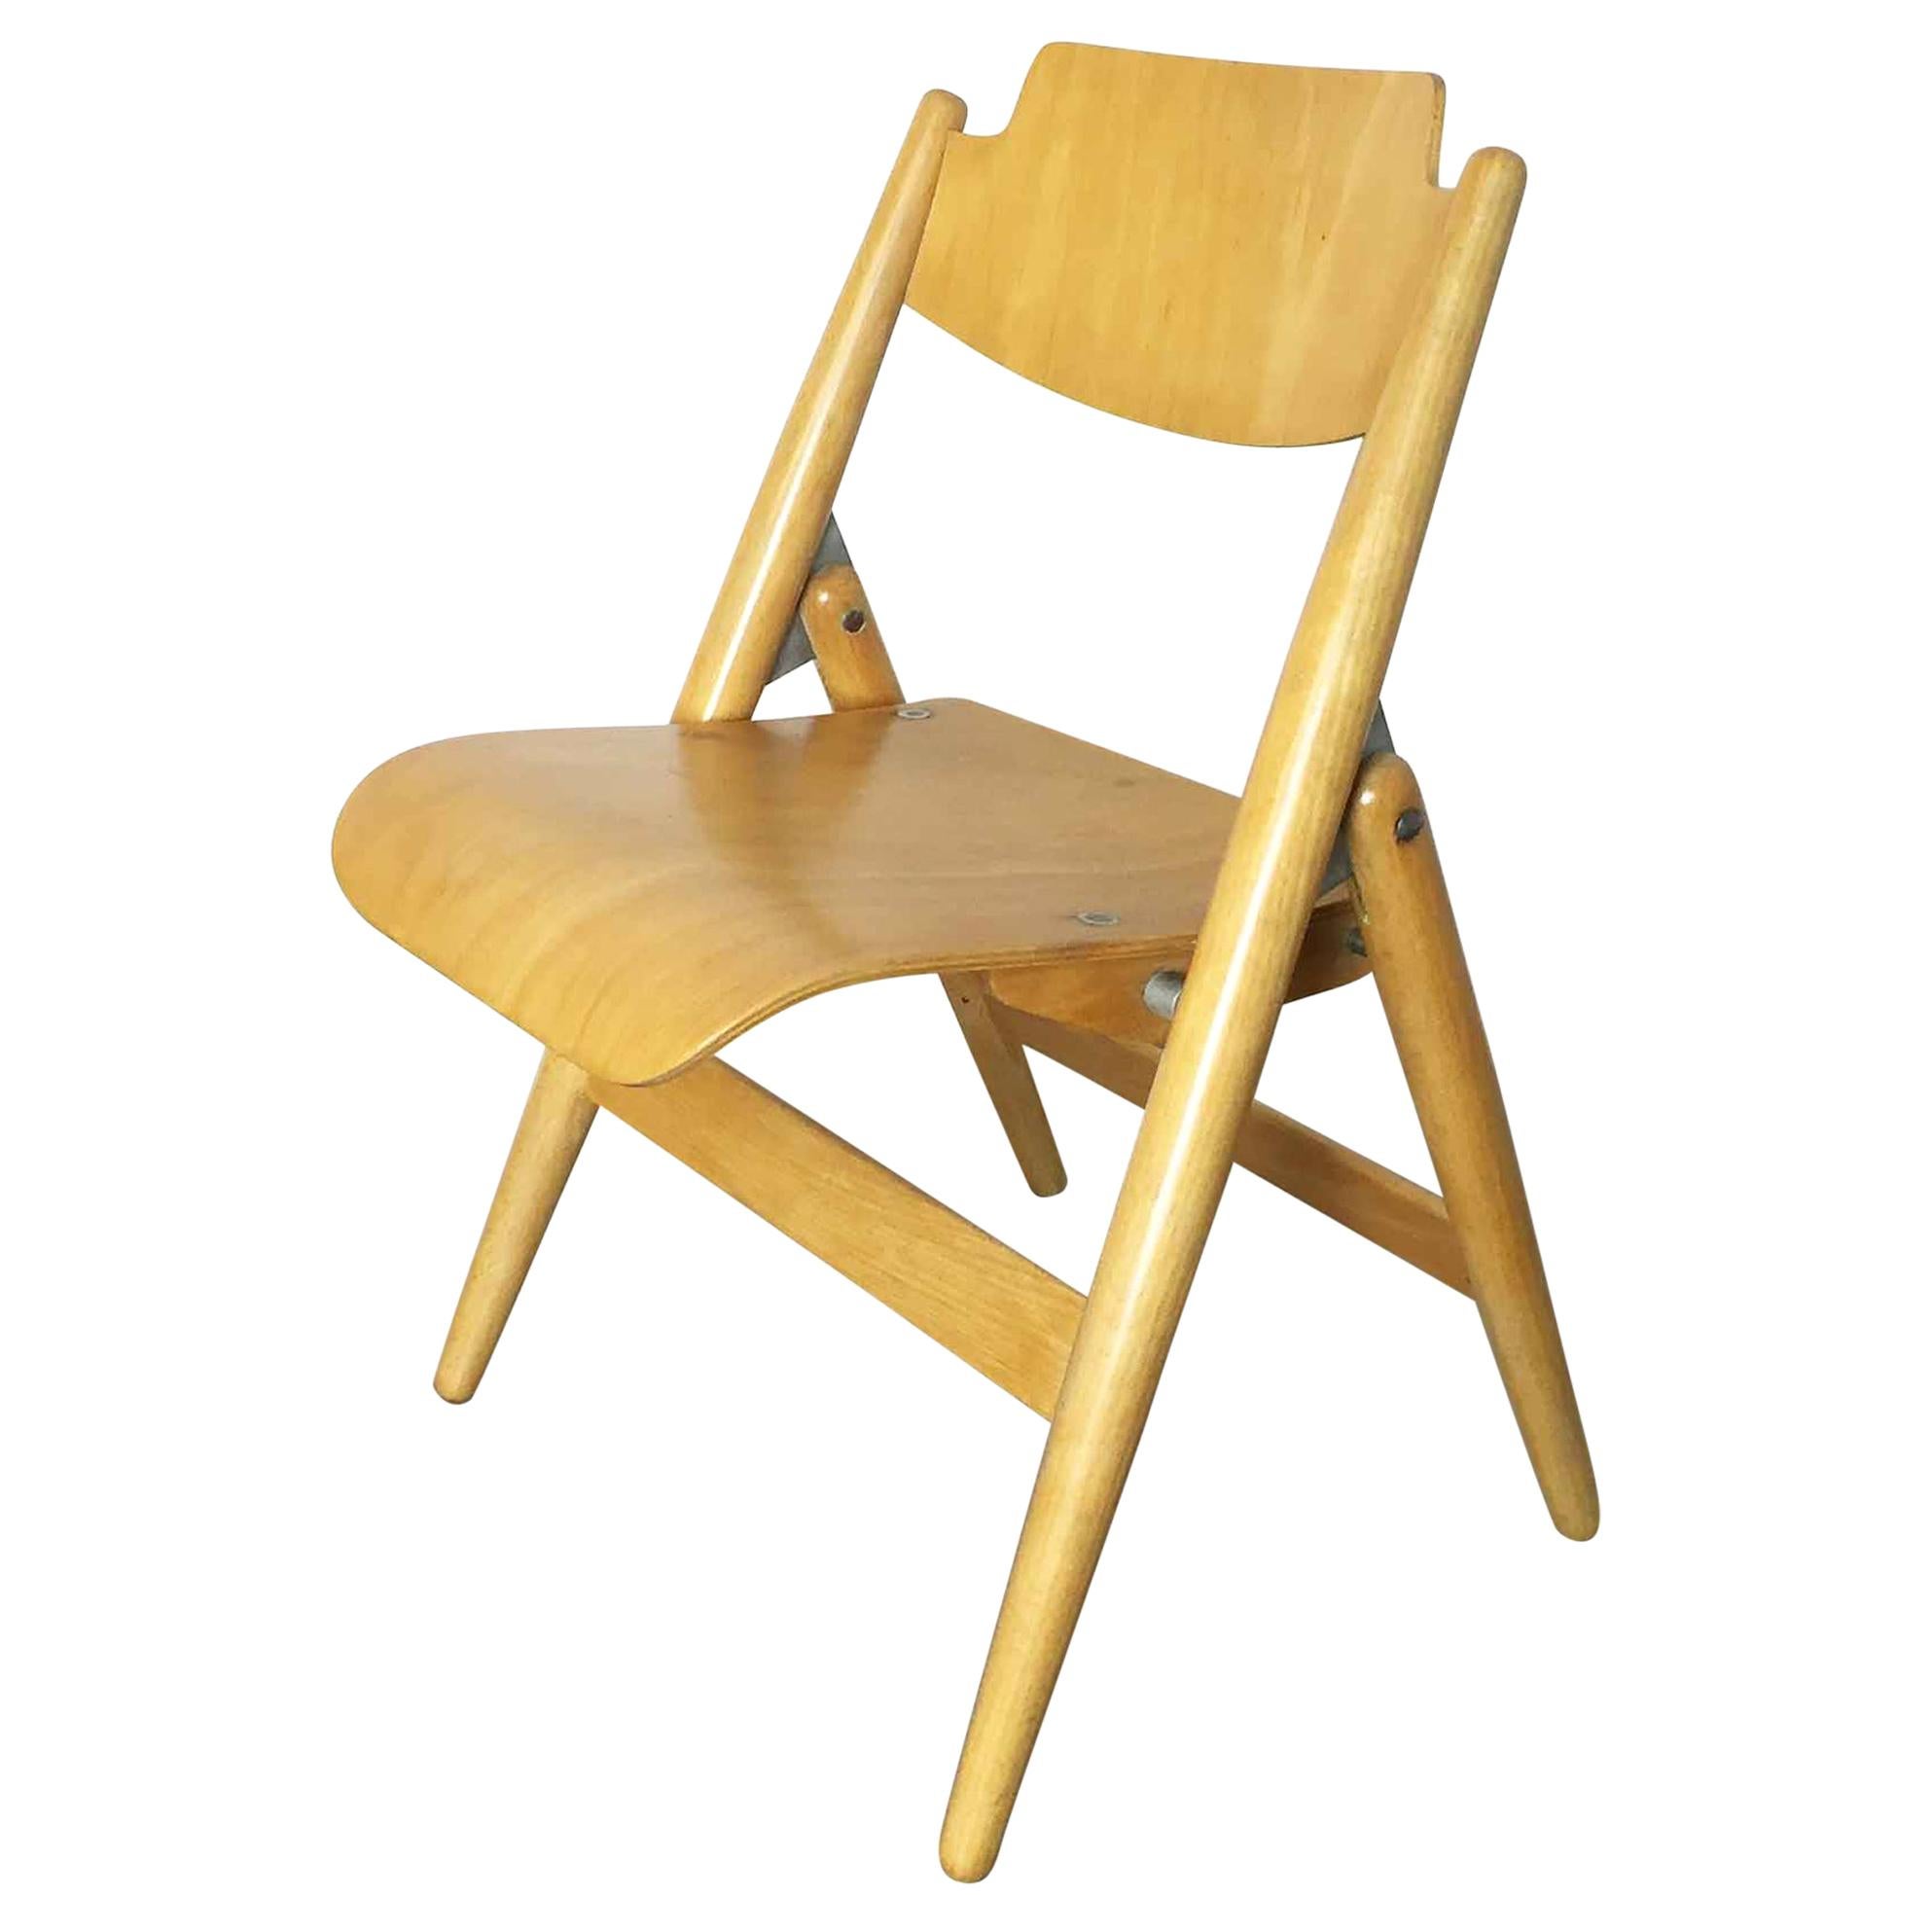 Wooden SE18 Children's Chair by Egon Eiermann for Wilde & Spieth, Germany 1950s For Sale